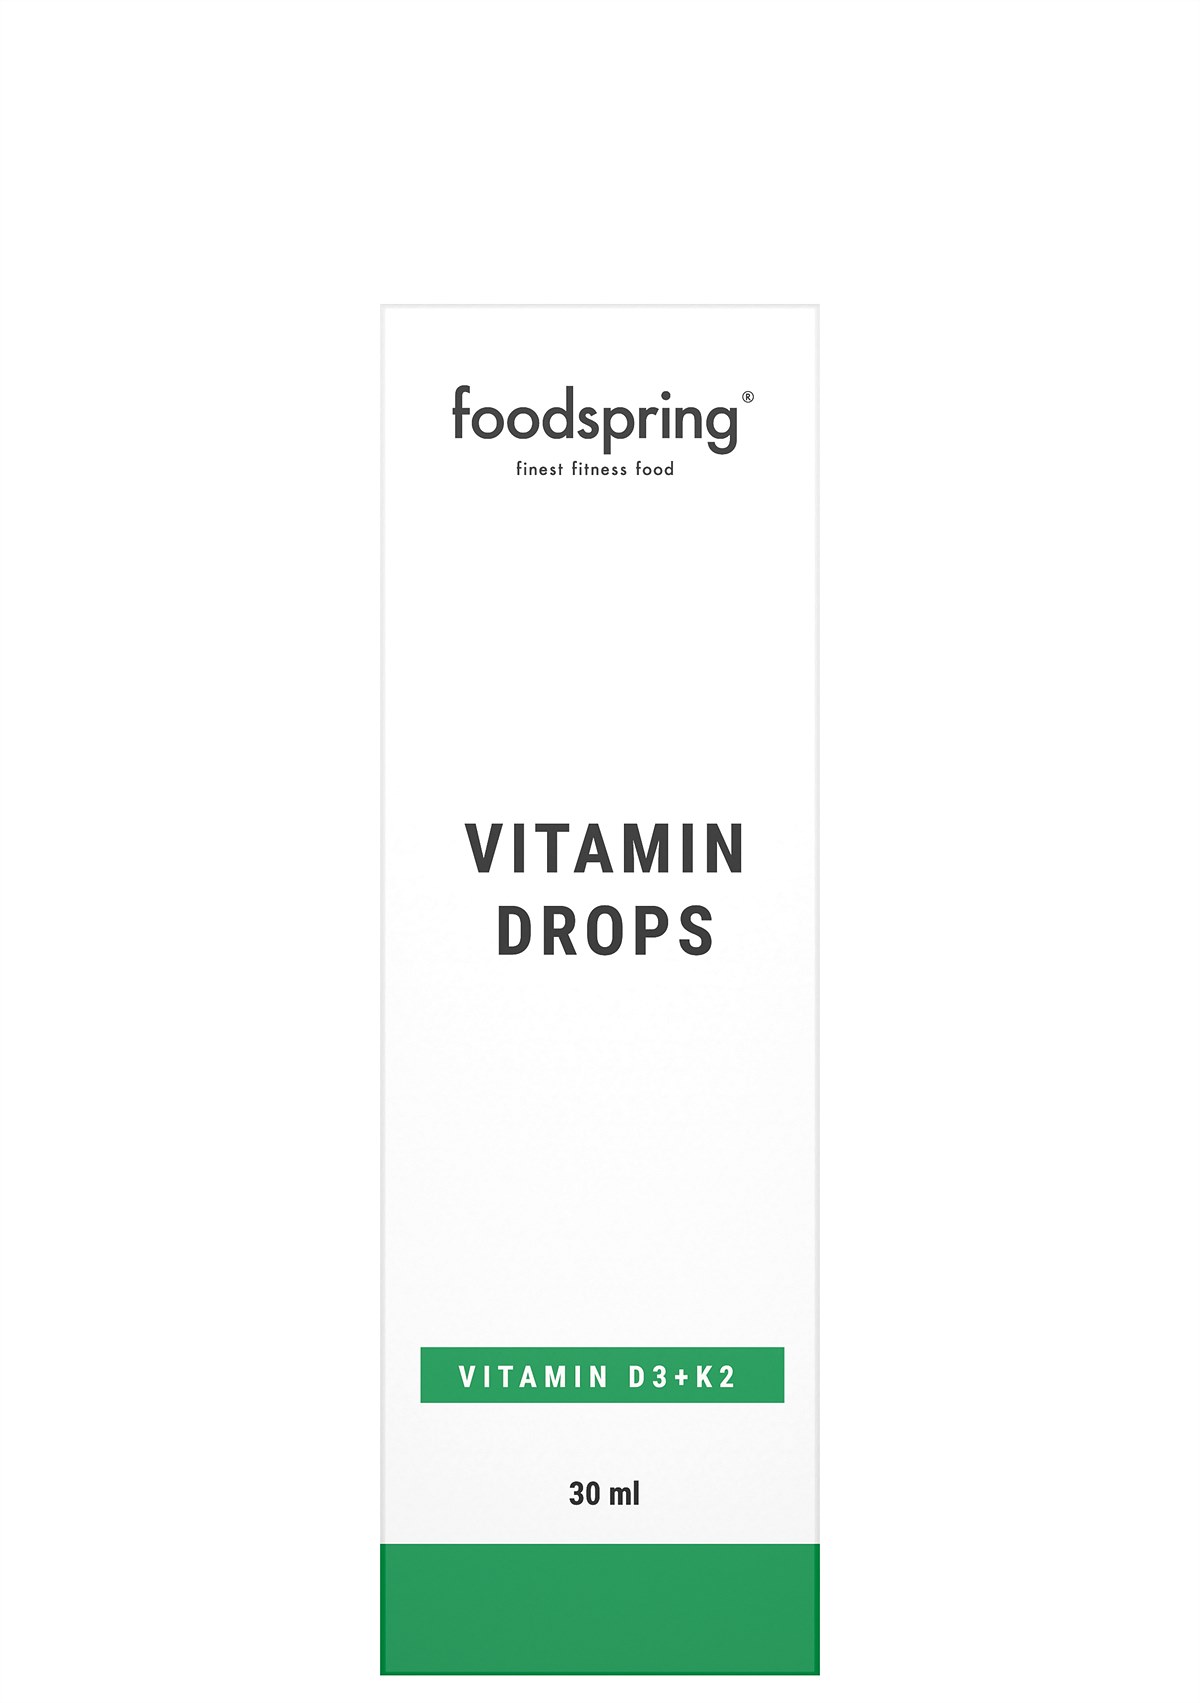 foodspring Vitamin Drops_EUR 24,99_1